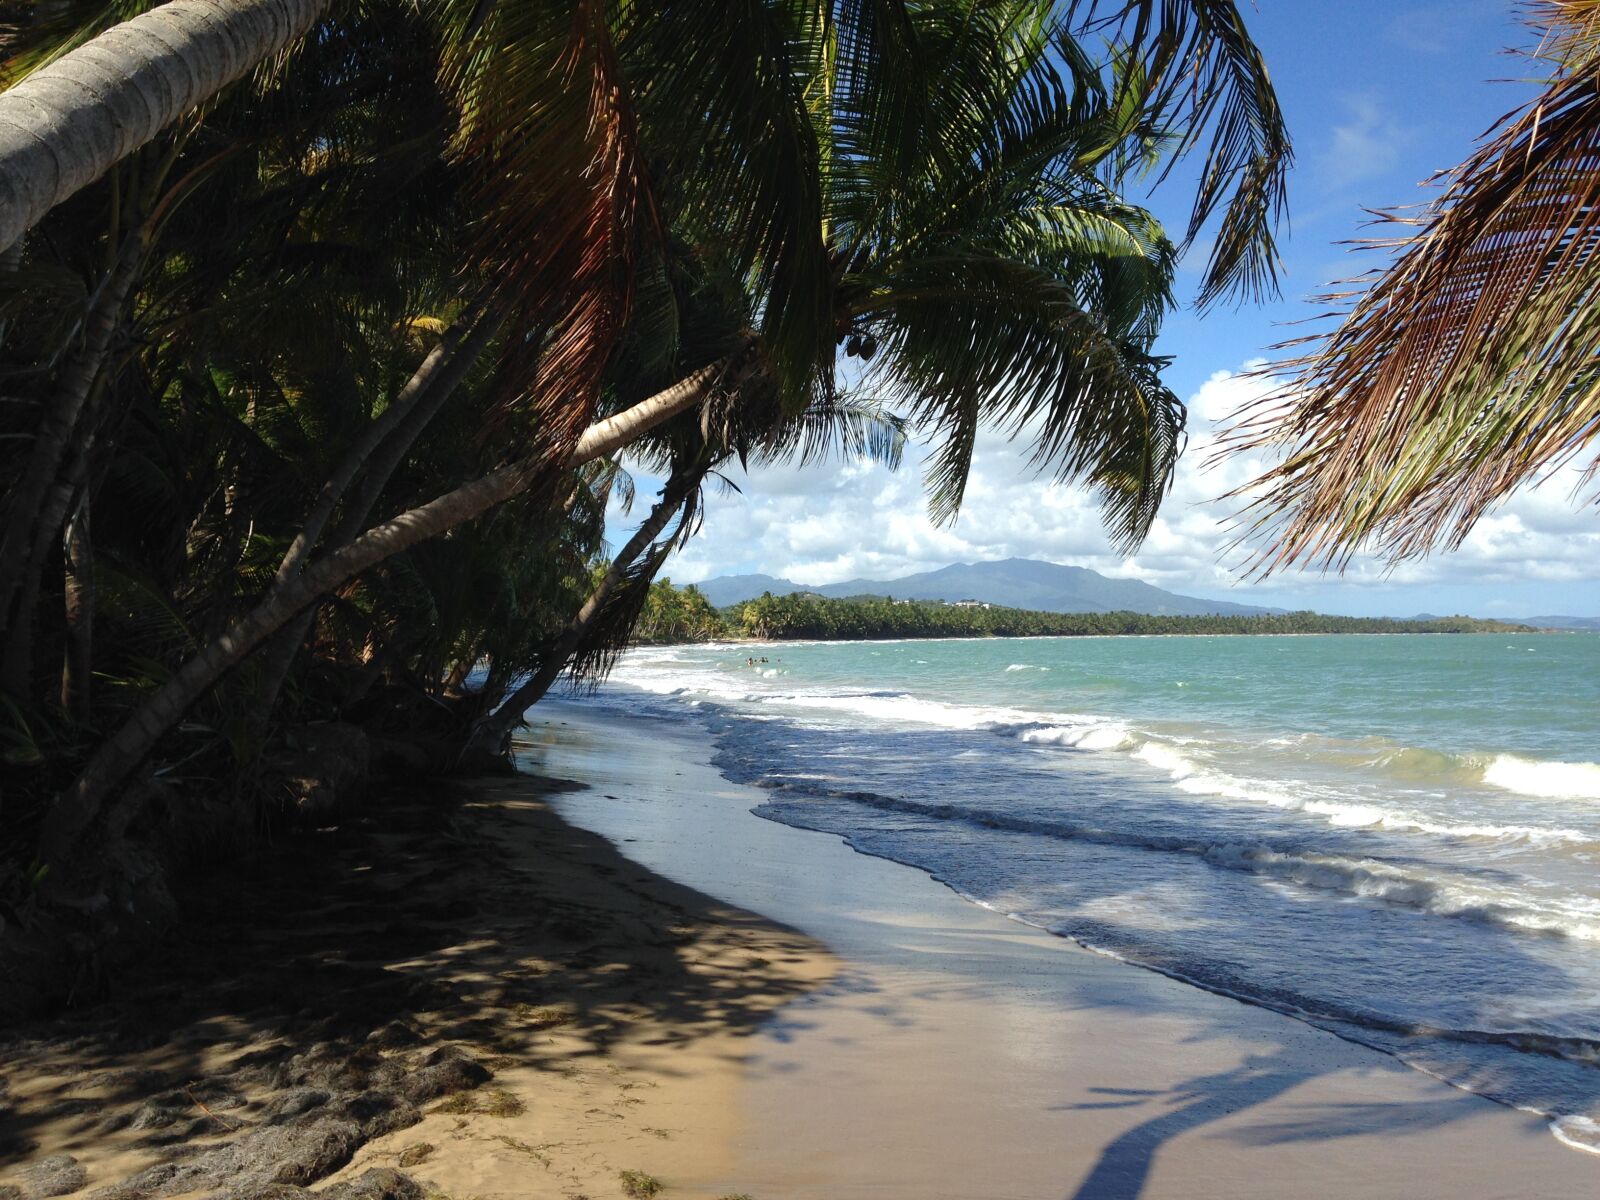 iPhone 5 back camera 4.12mm f/2.4 sample photo. Beach, palm trees, island photography